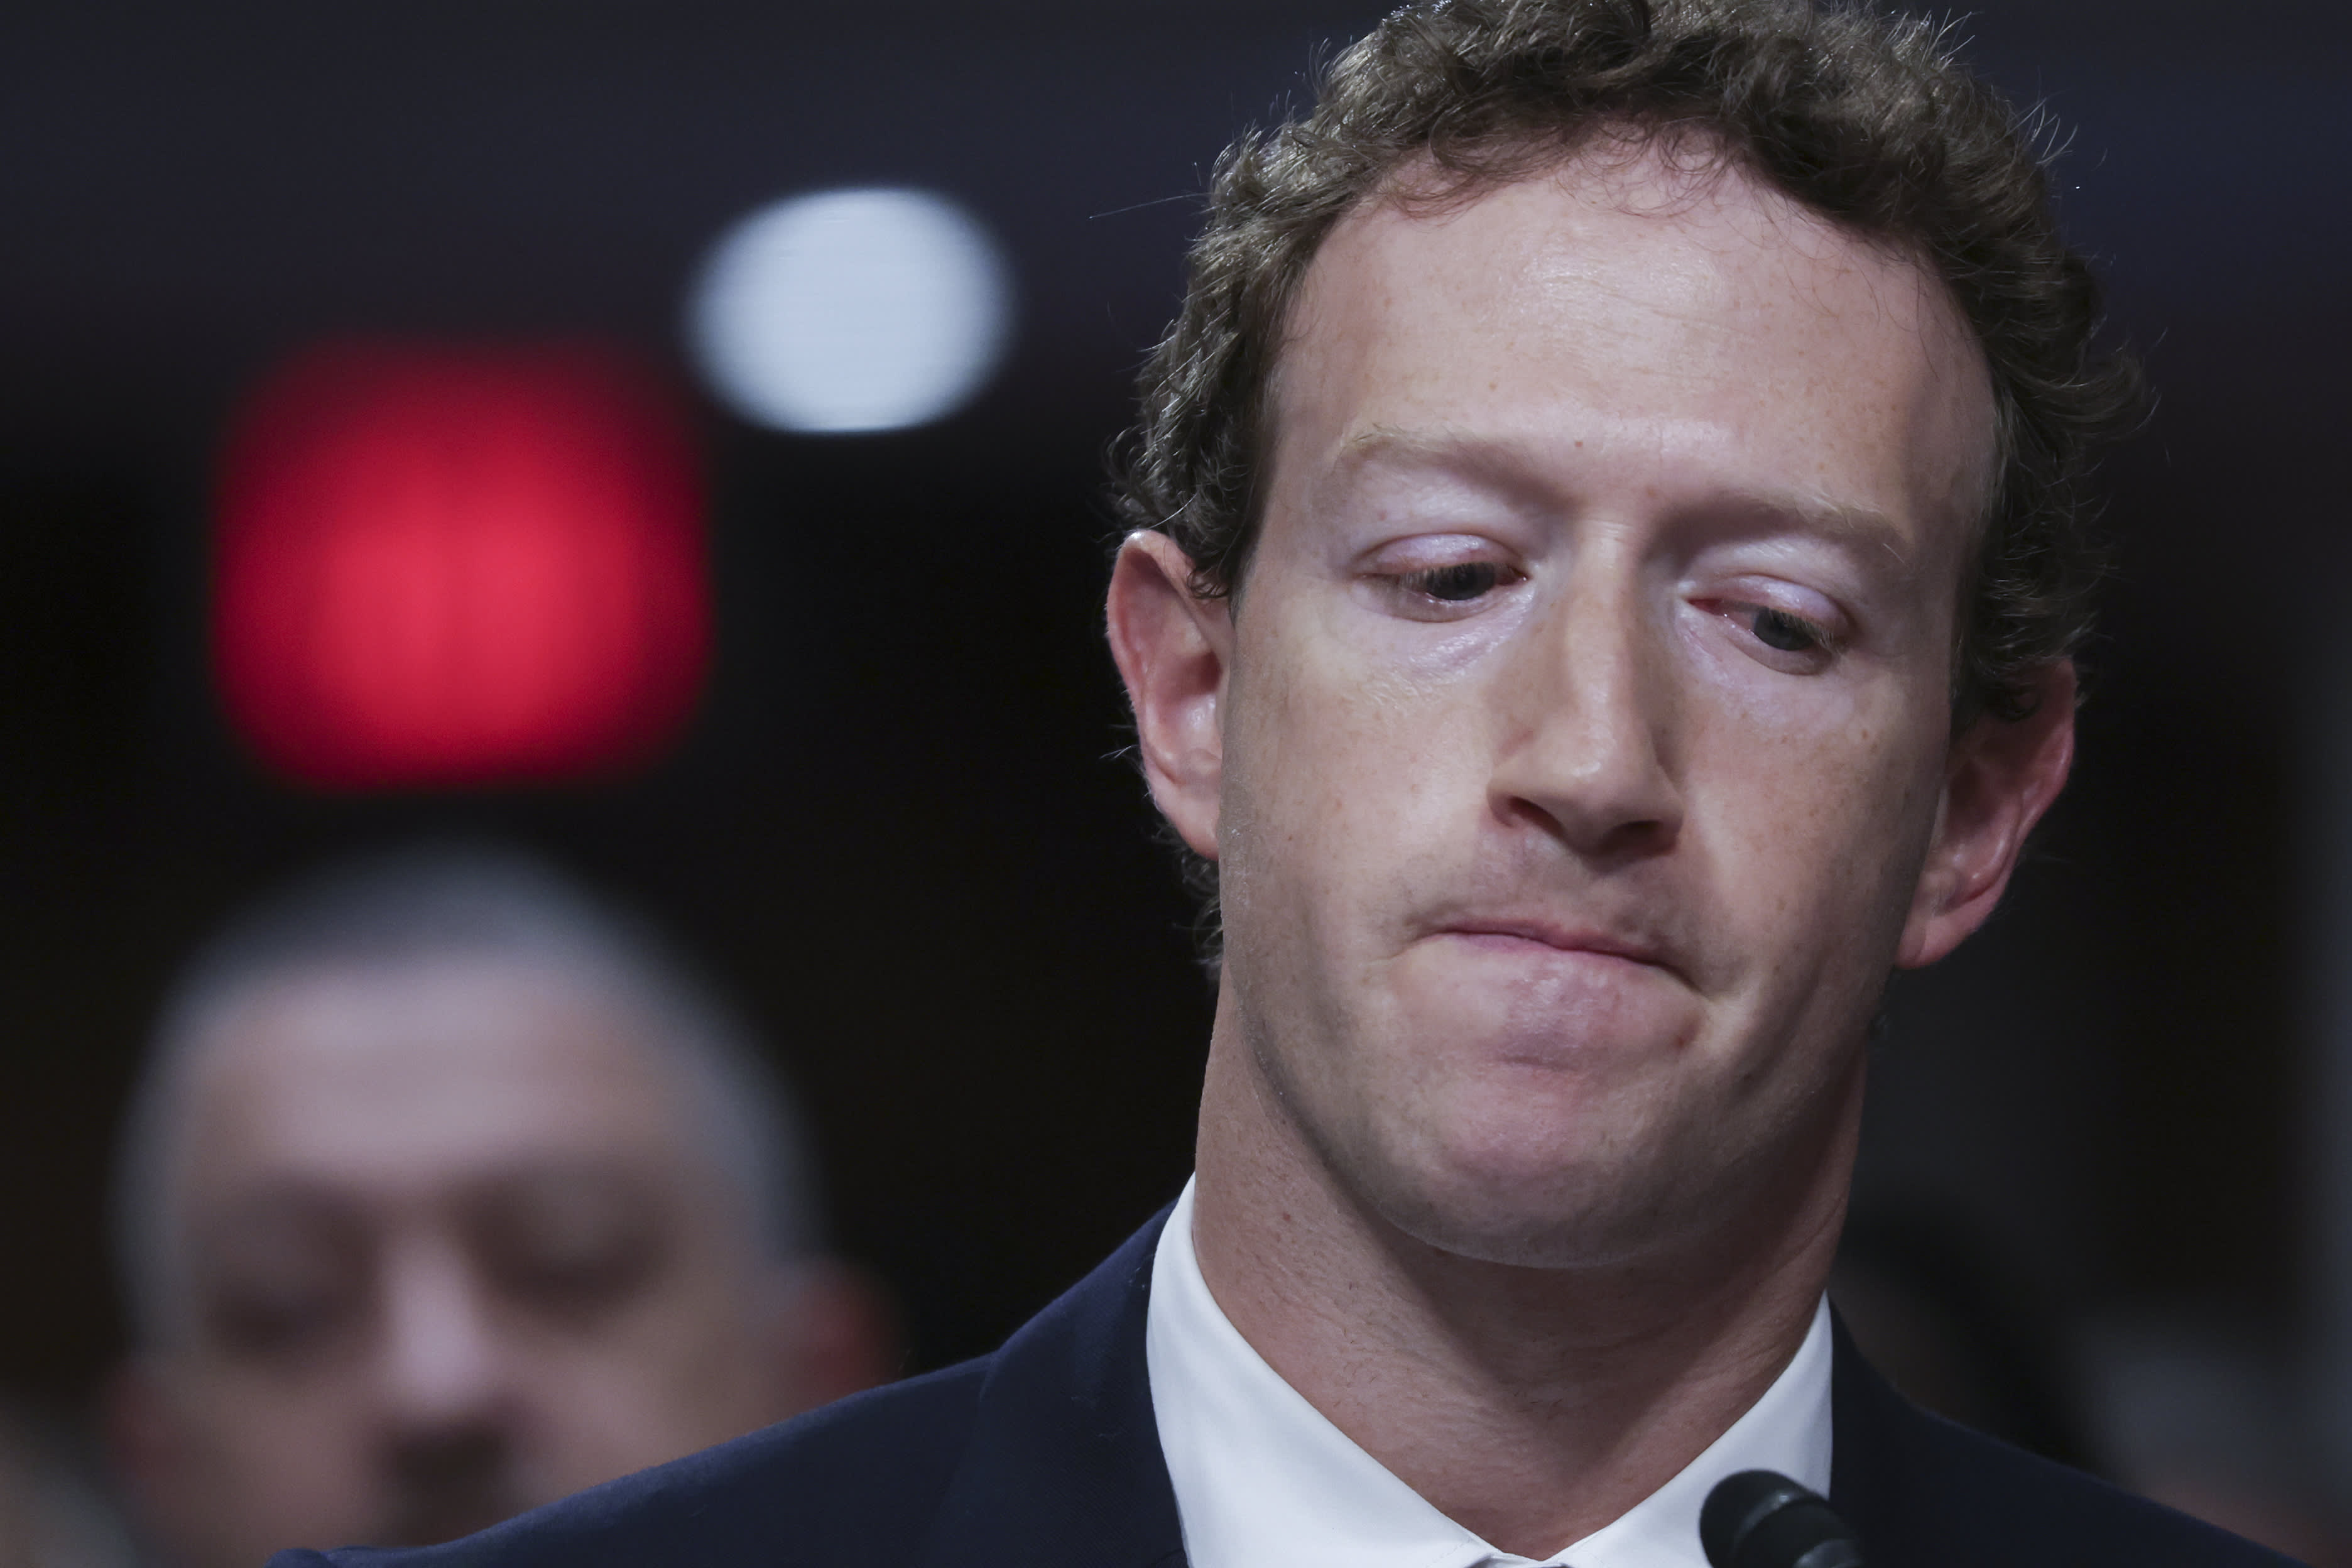 Meta loses 0 billion in value, Zuckerberg focuses on AI, metaverse